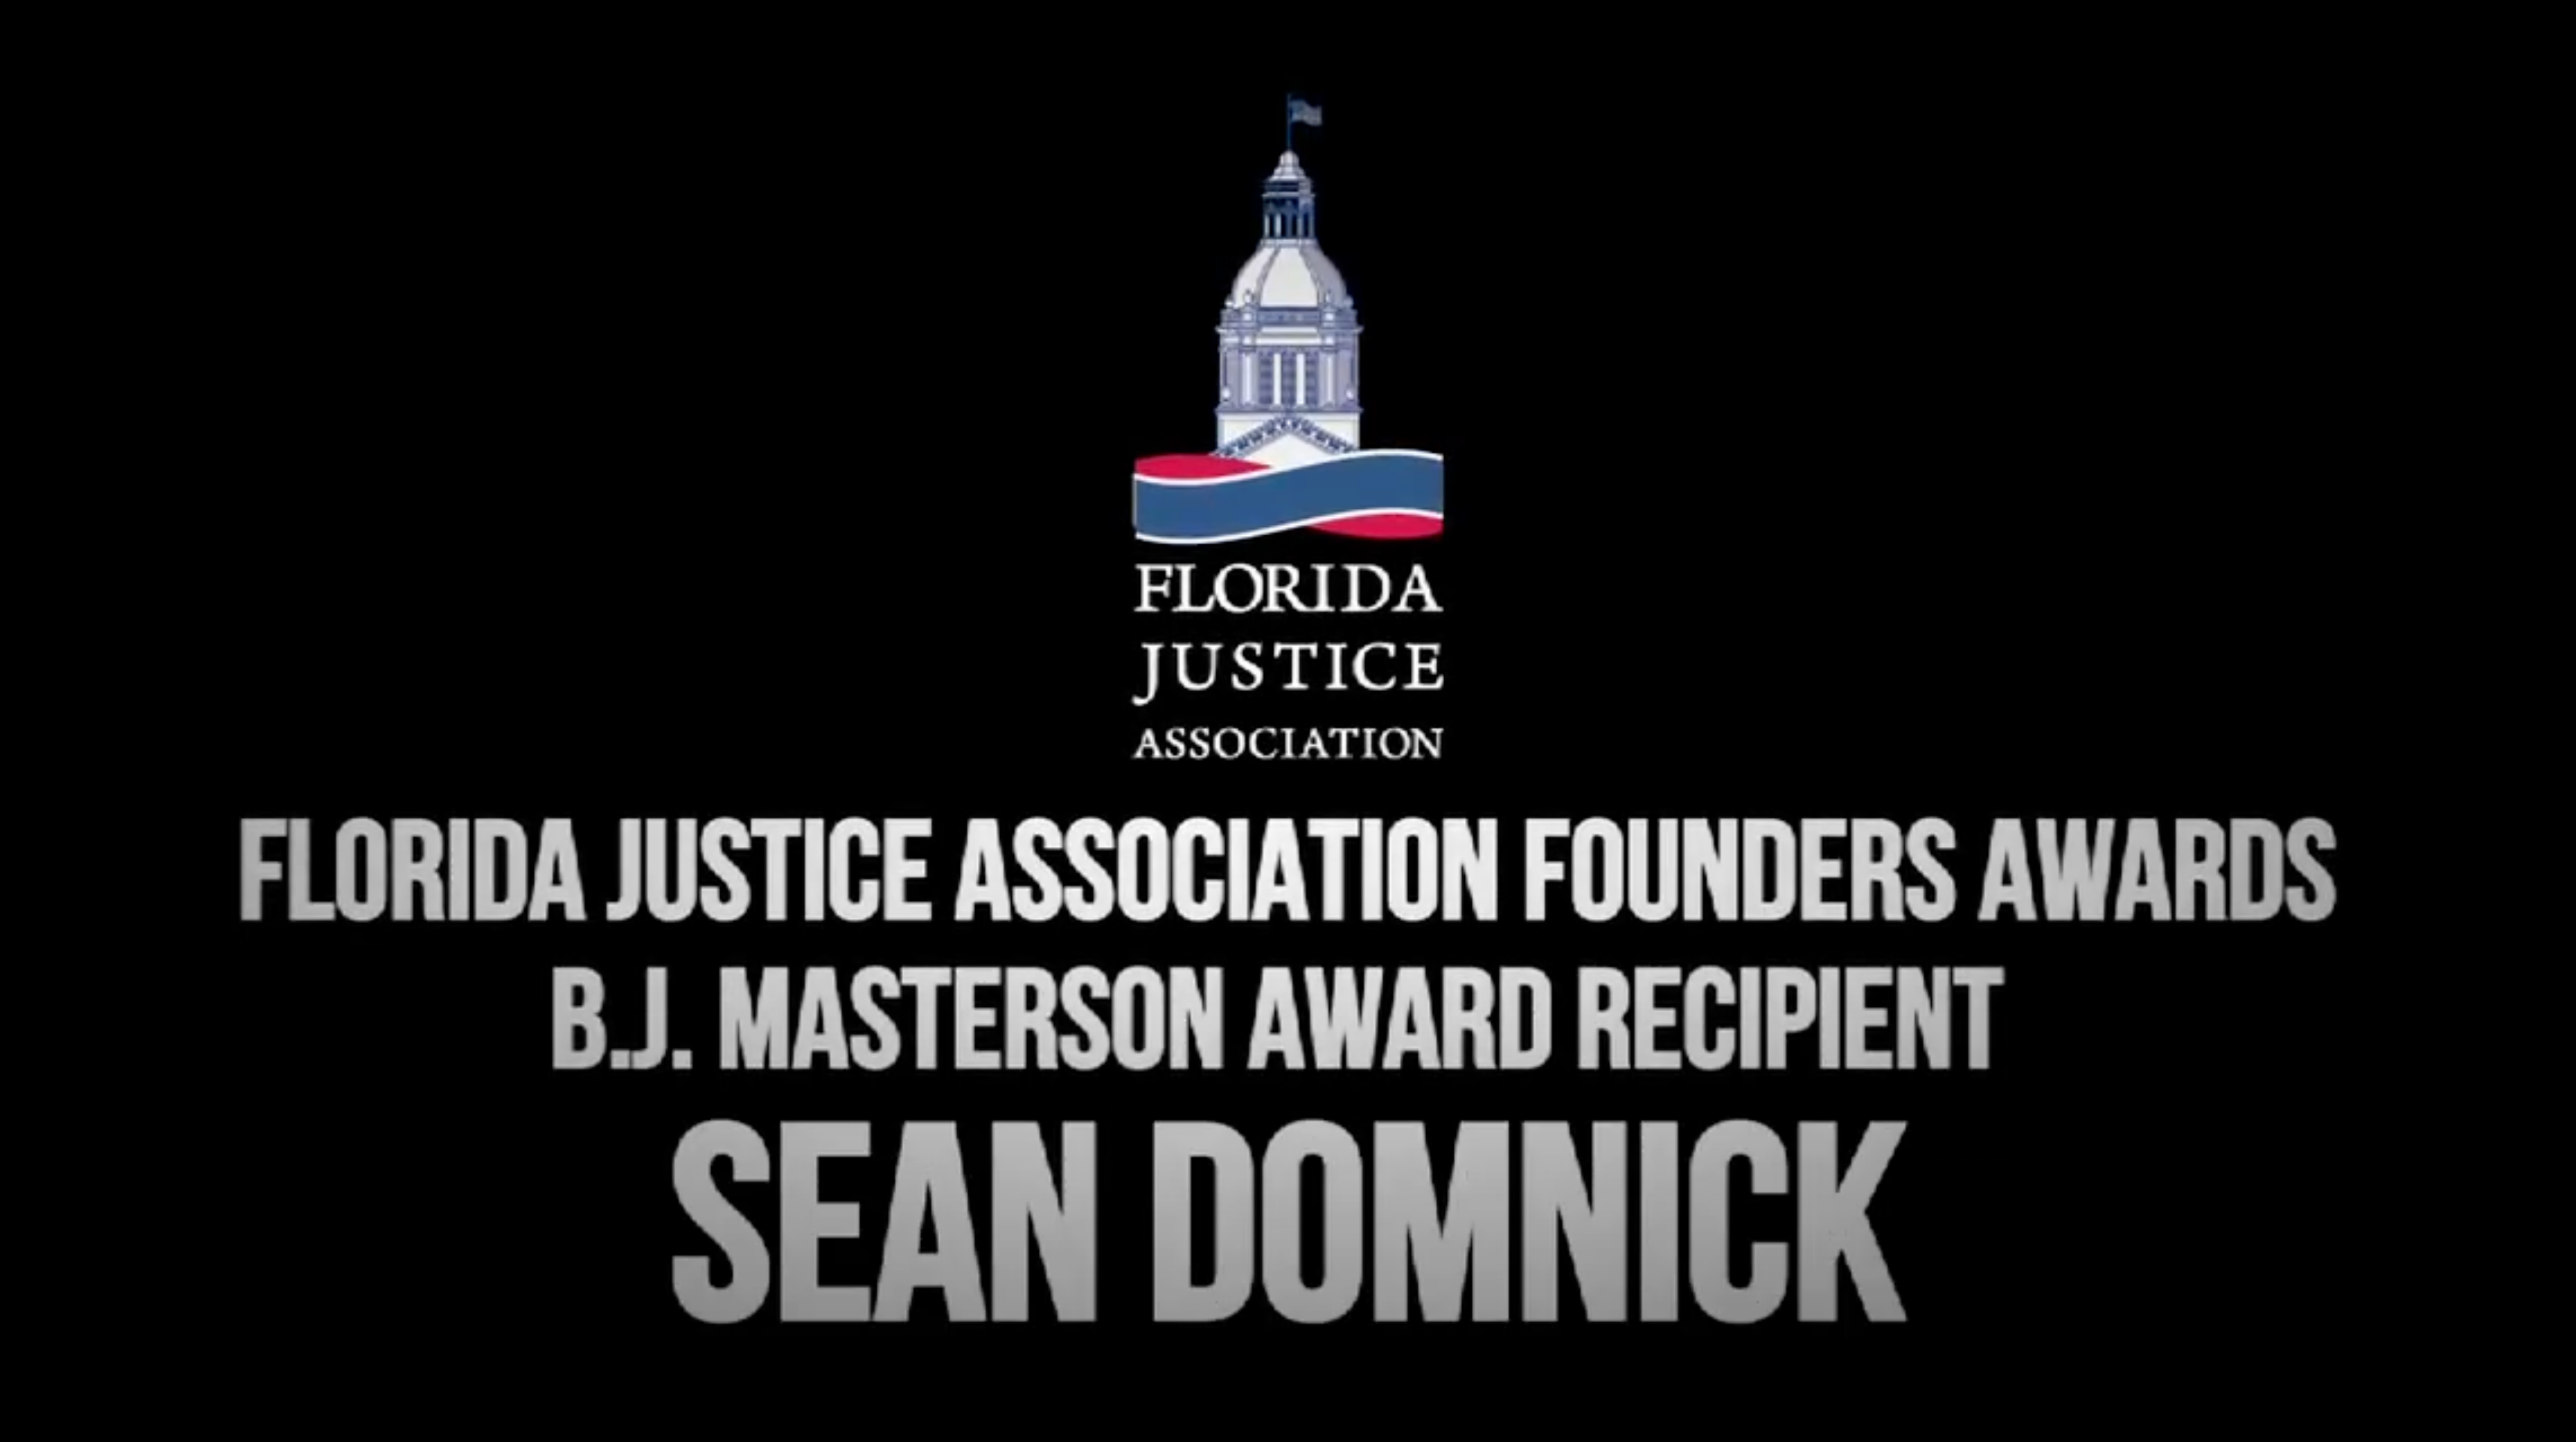 Sean Domnick - Recipient of The B.J. Masterson Award Thumbnail